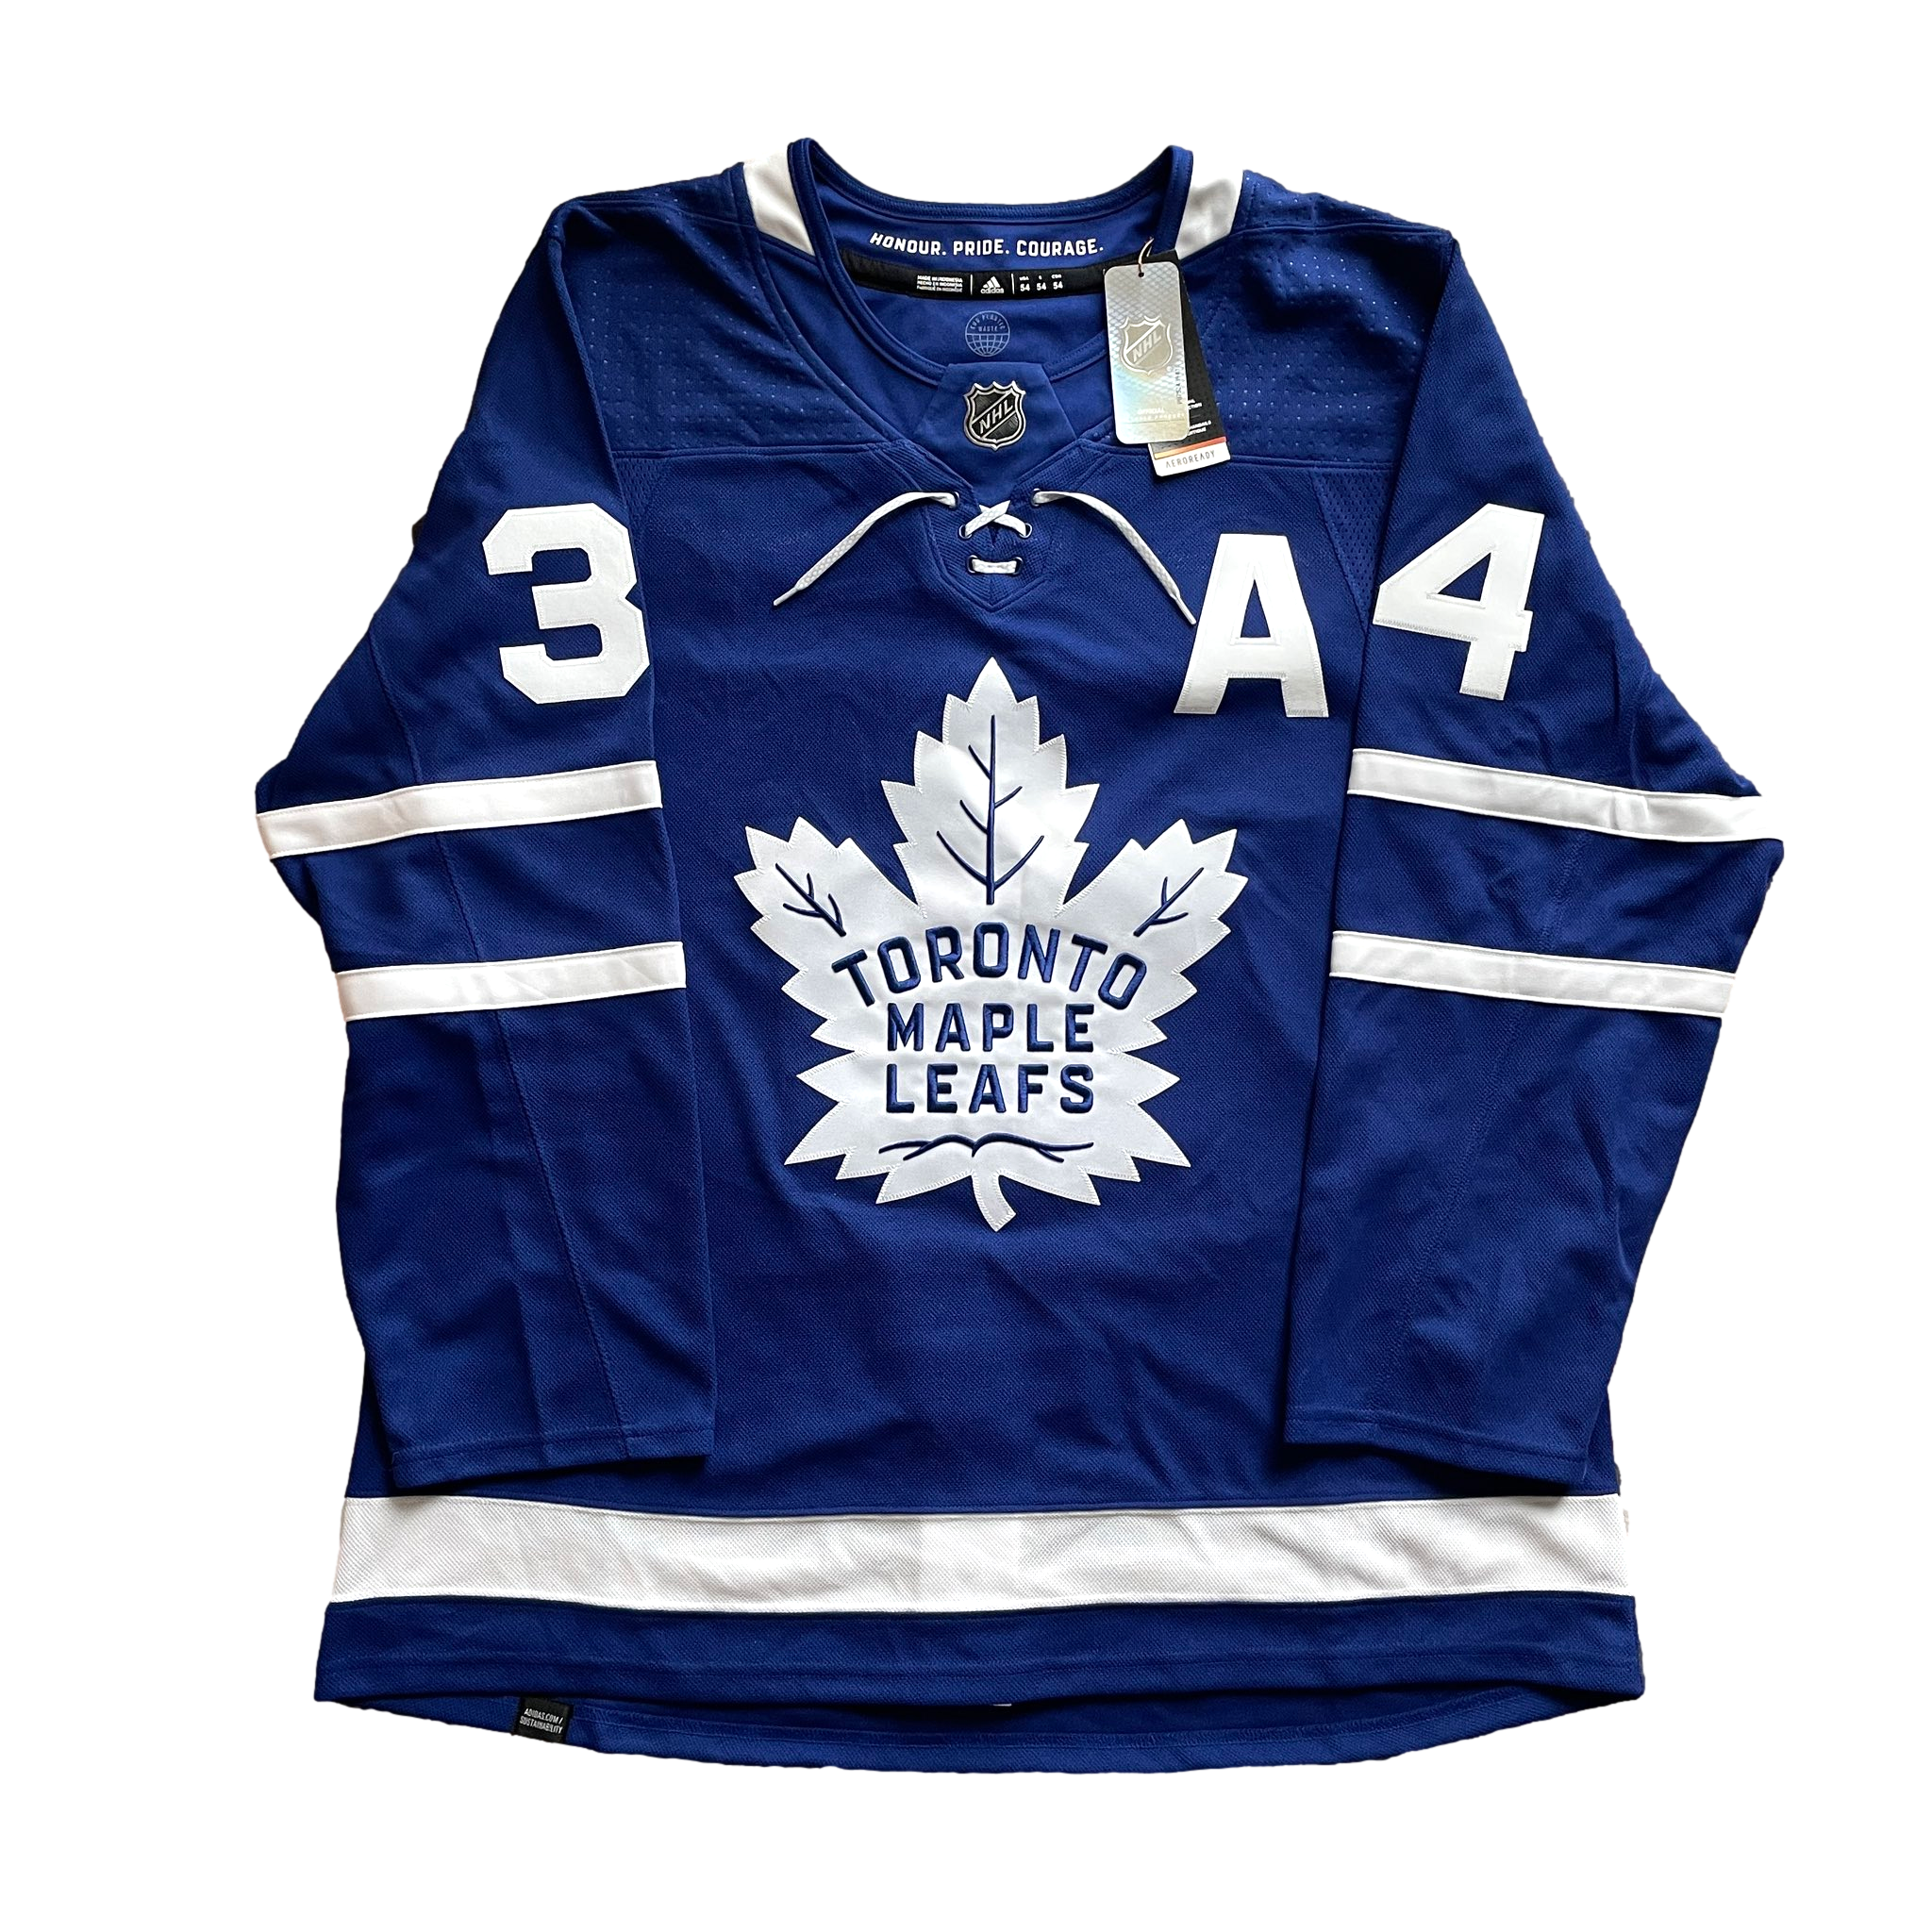 Toronto Maple Leafs NHL Hockey Jersey (54)